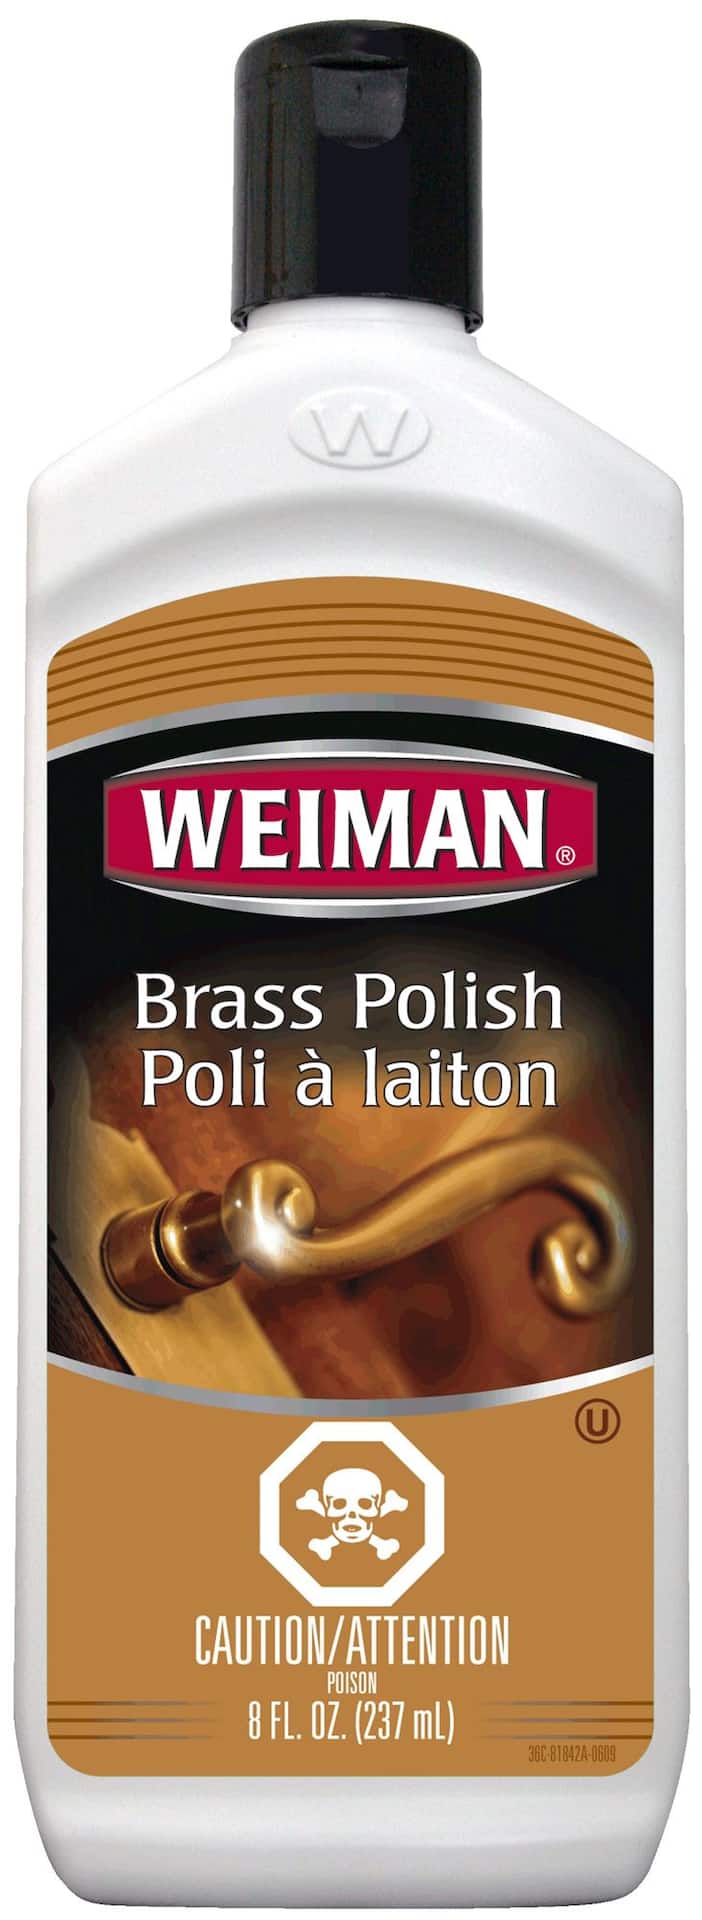 Weiman Brass Polish